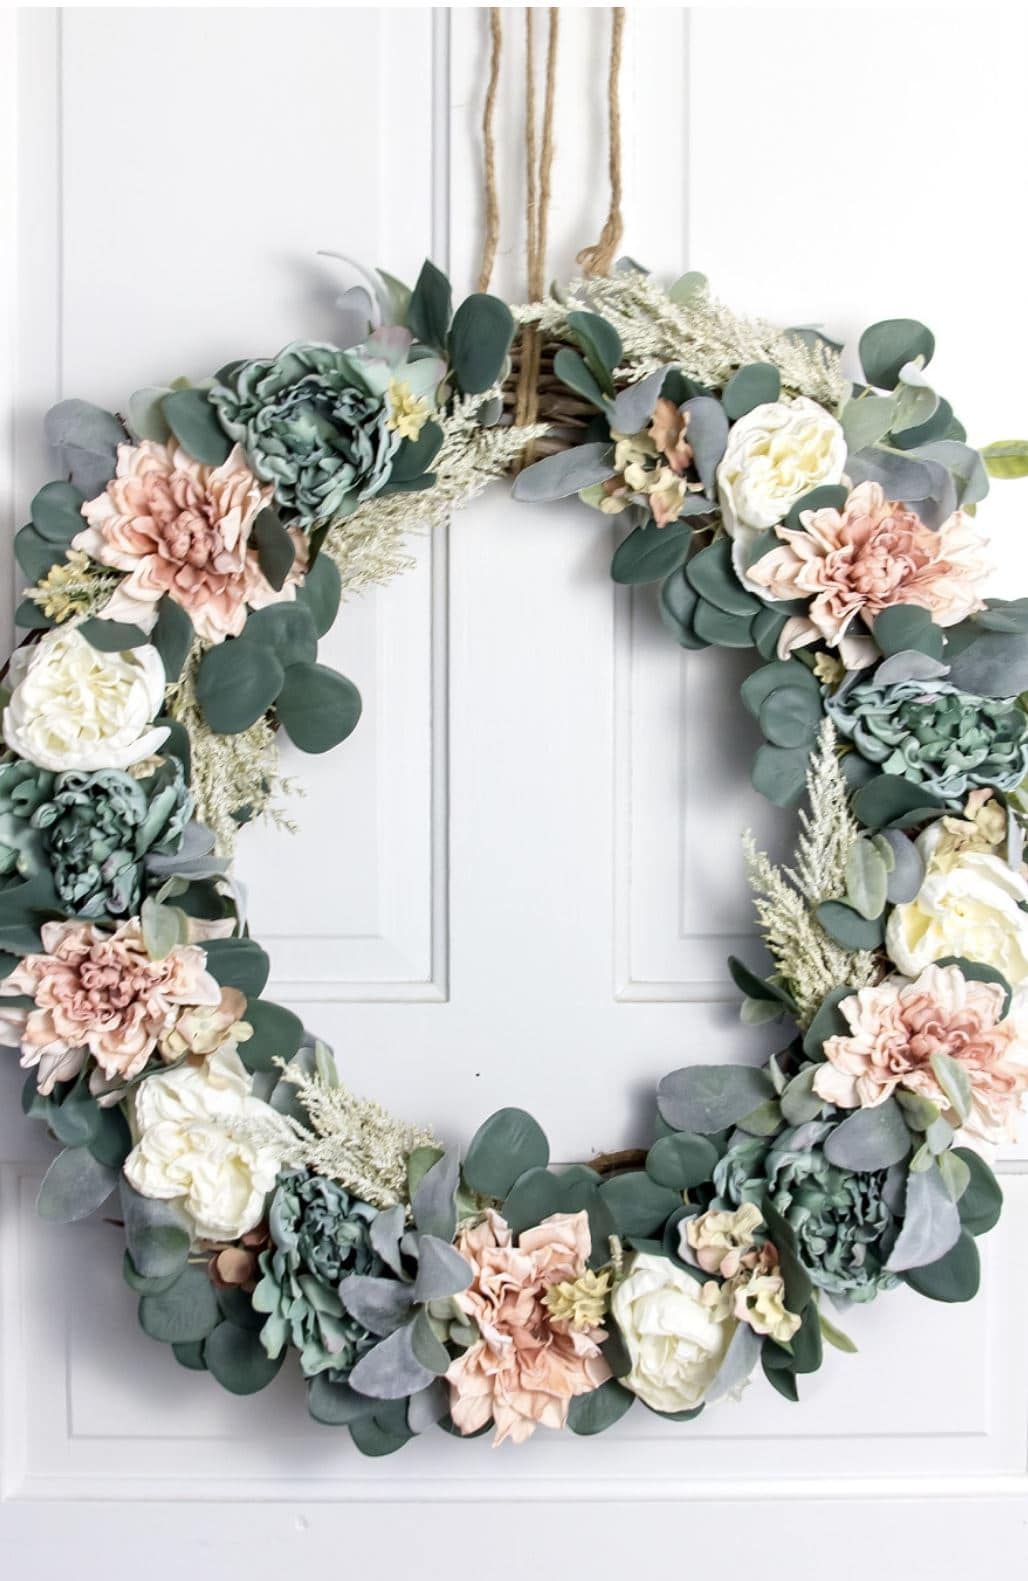 A DIY floral wreath hanging on a door.